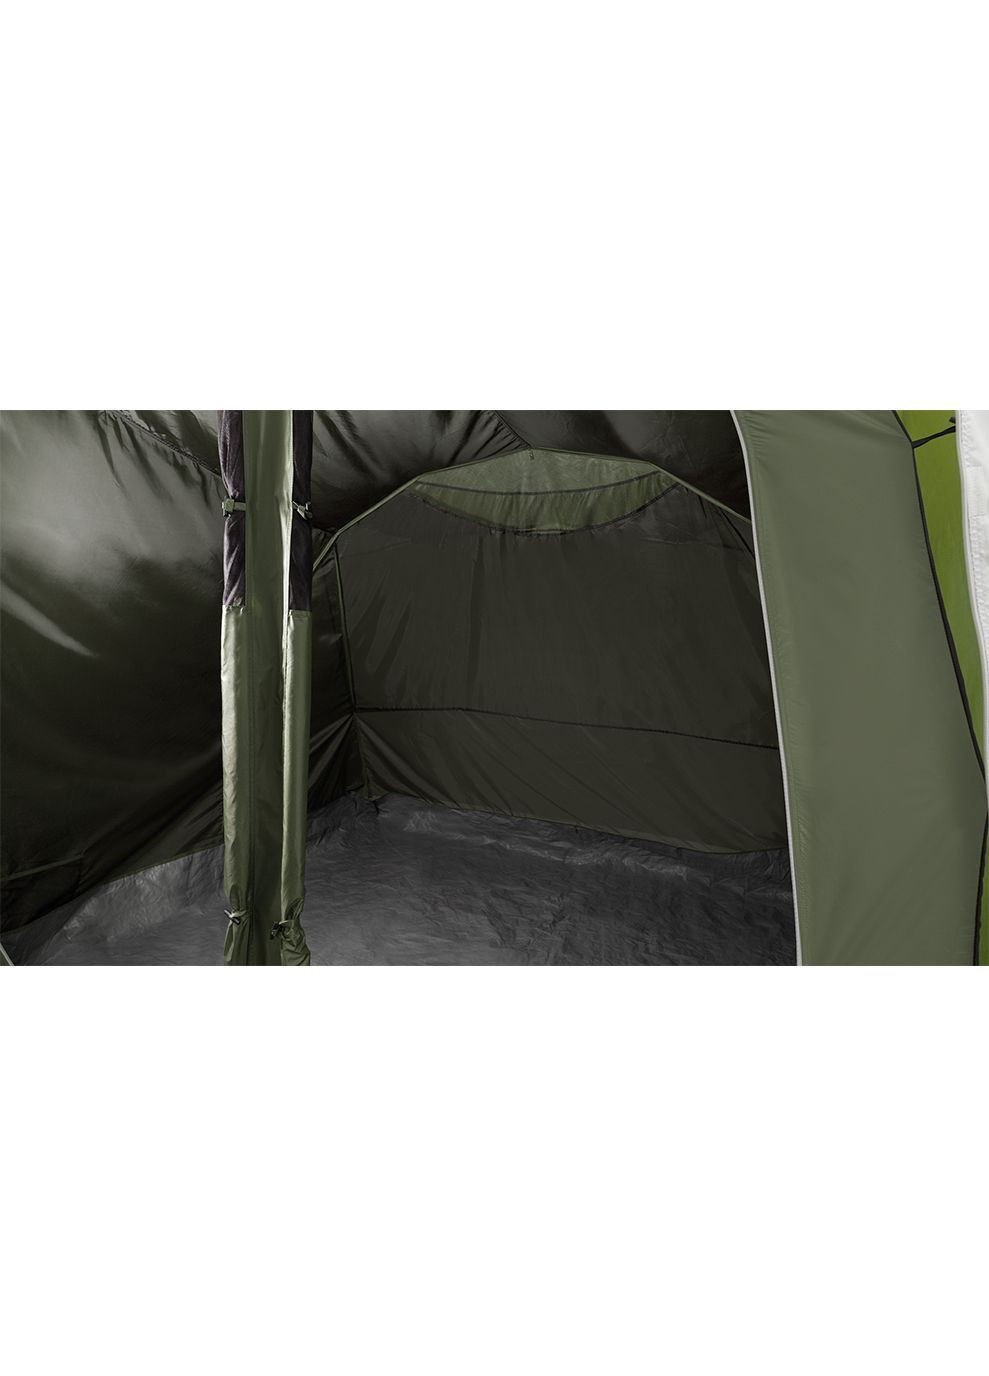 Палатка шестиместная Huntsville Twin 600 Green/Grey Easy Camp (282317713)